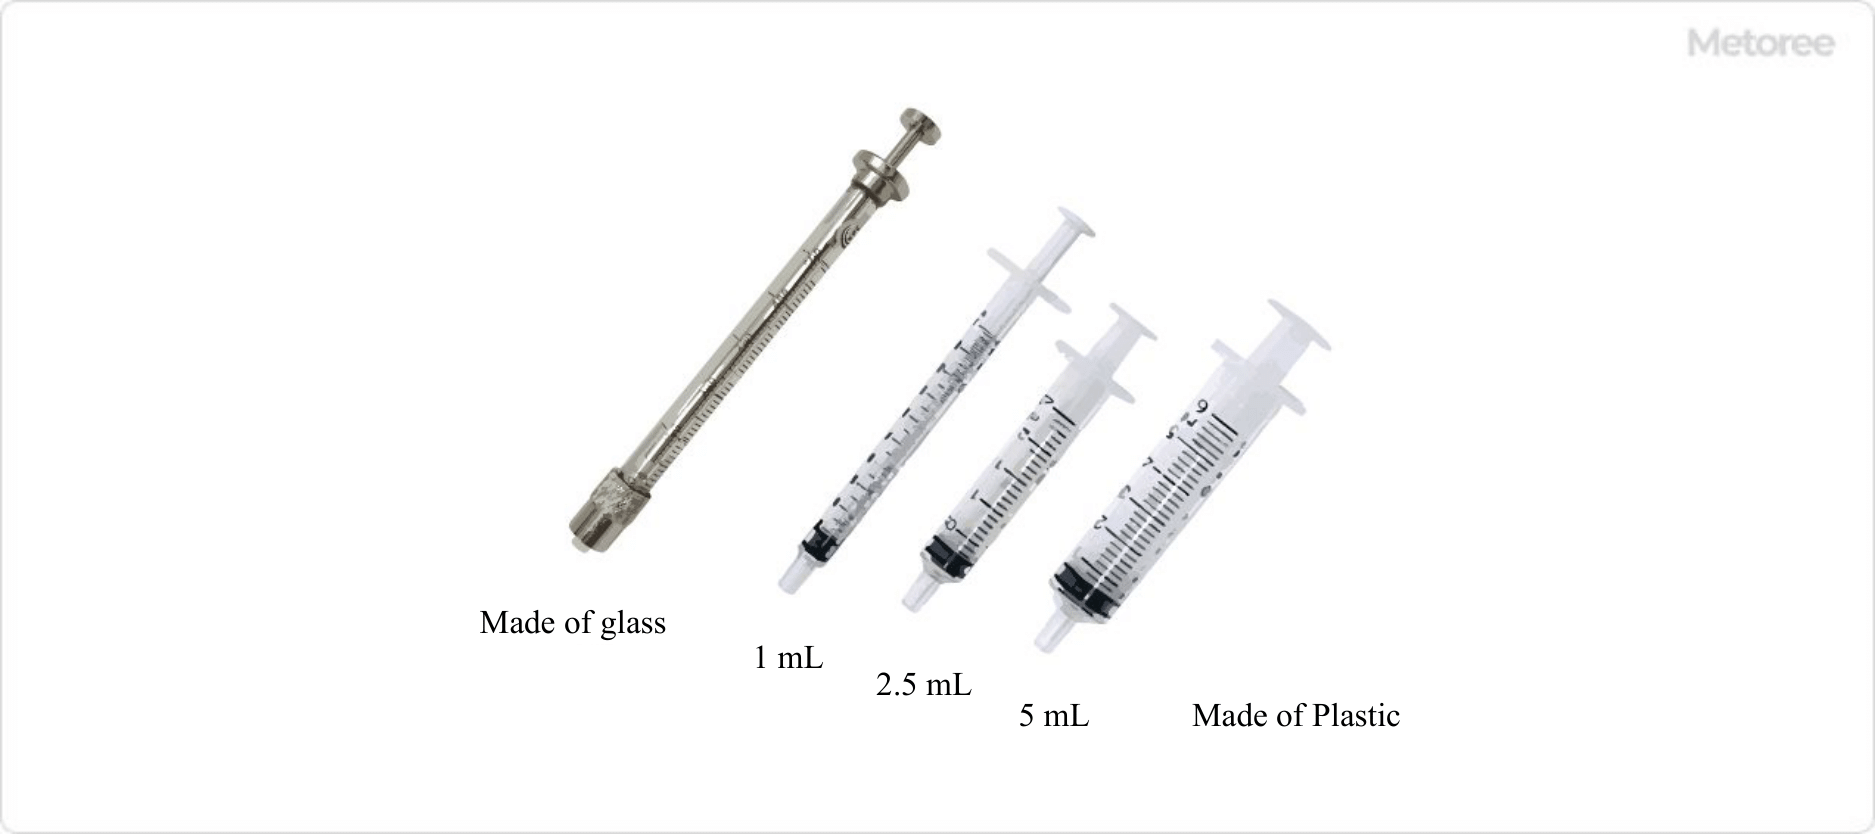 Figure 1. Image of a syringe